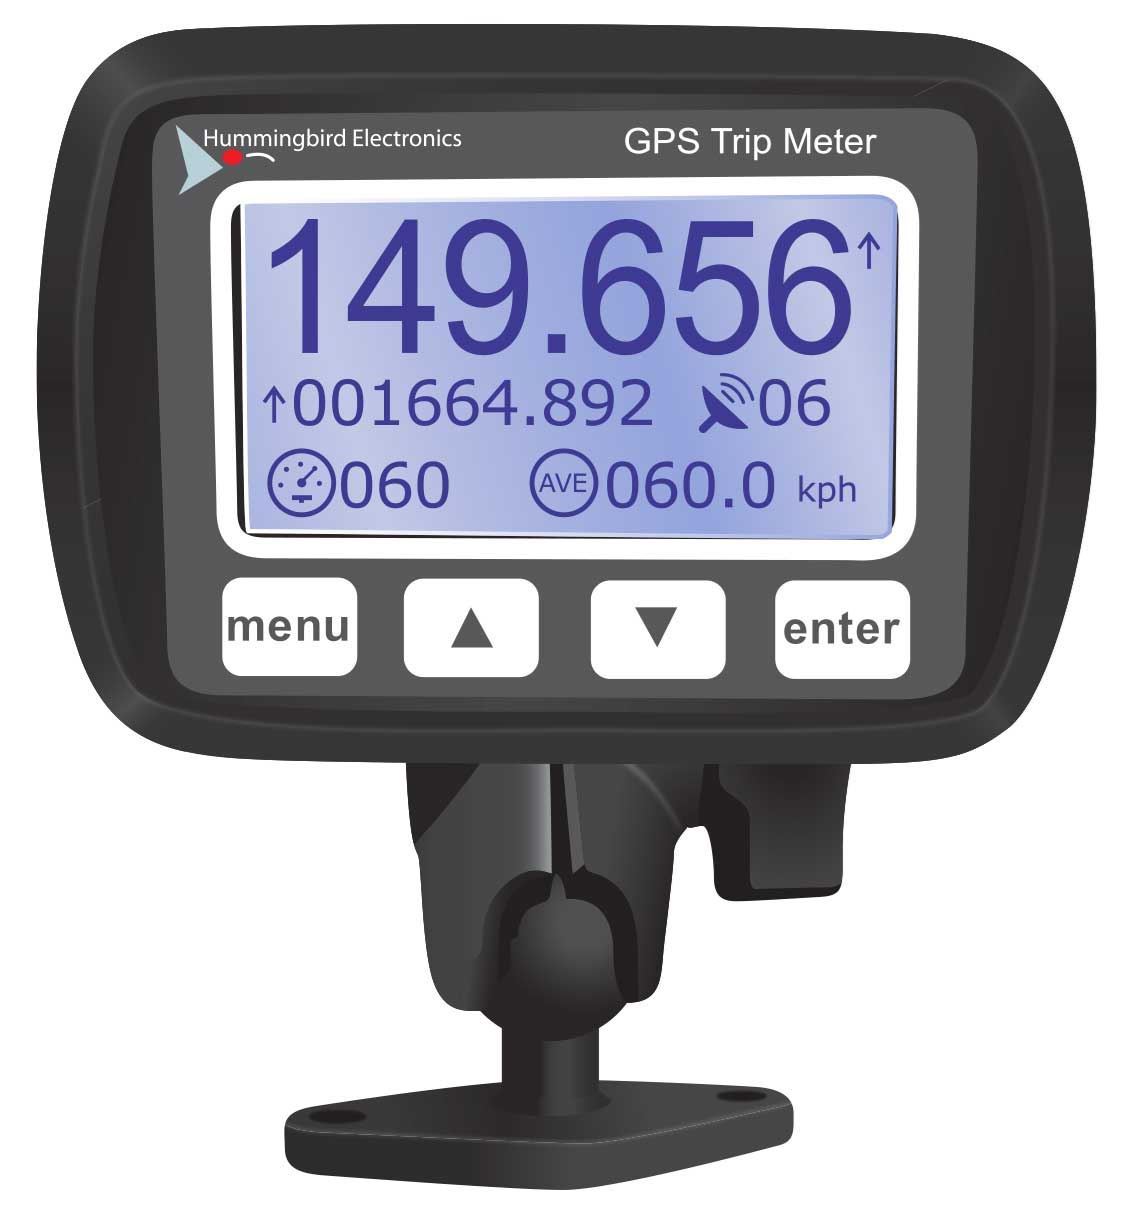 meaning of trip meter